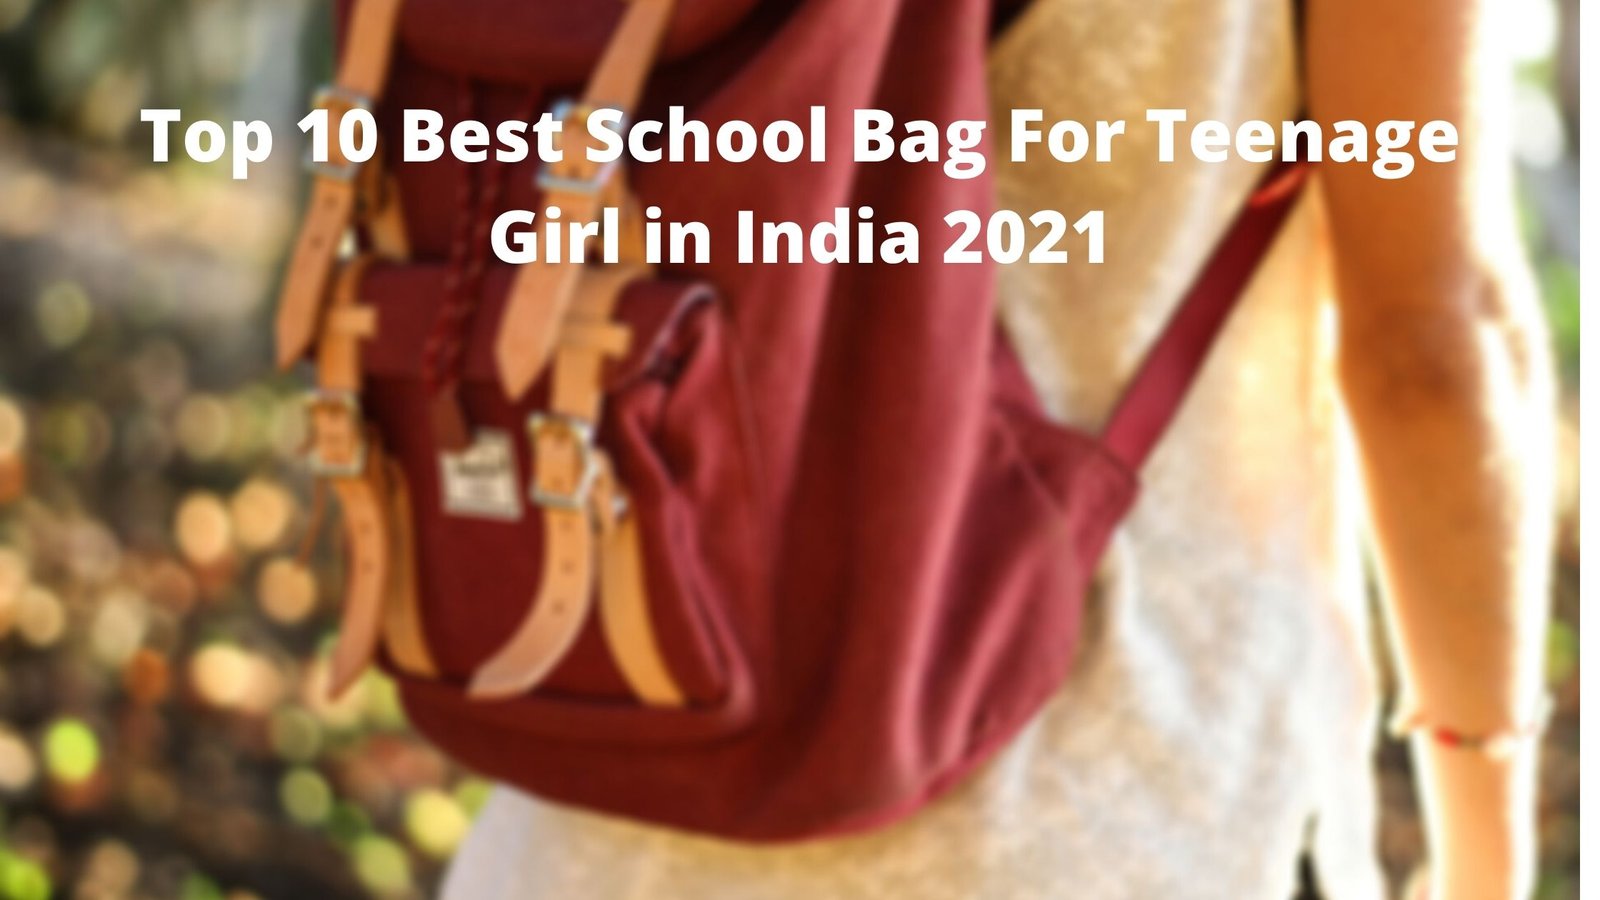 Top 10 Best School Bag For Teenage Girl in India 2021